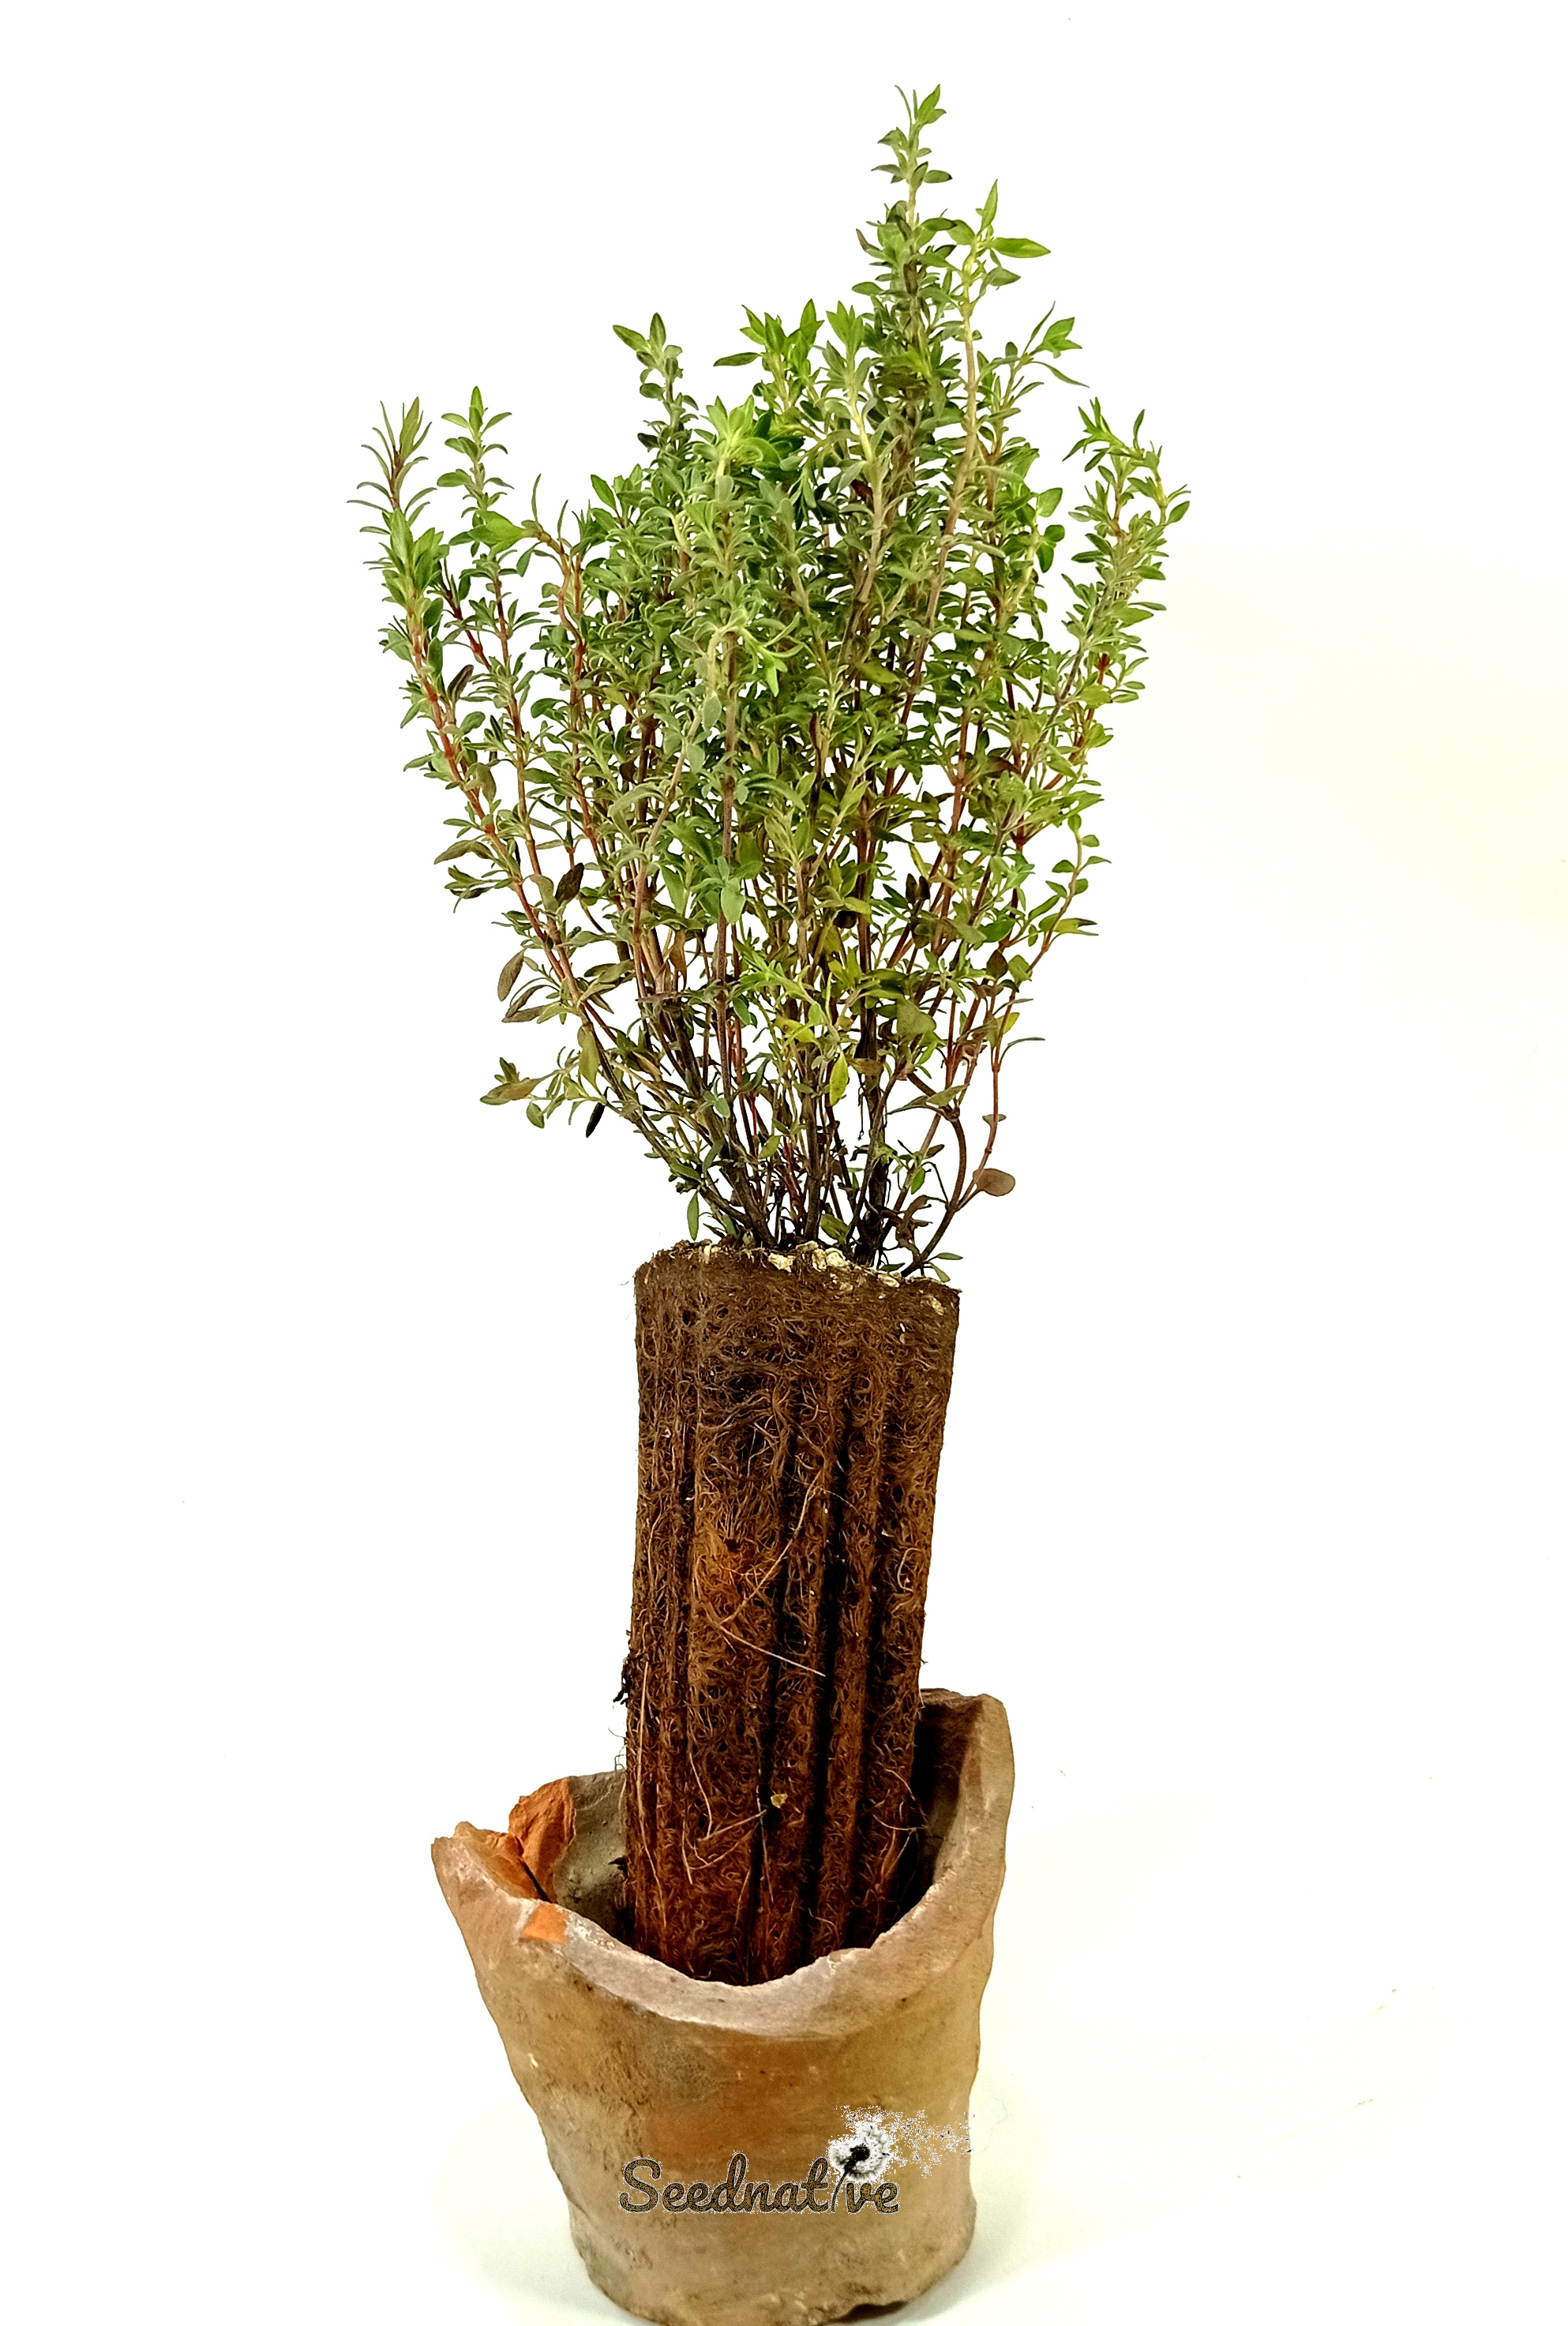 Planta Tomillo blanco - Thymus mastichina - 2 Años